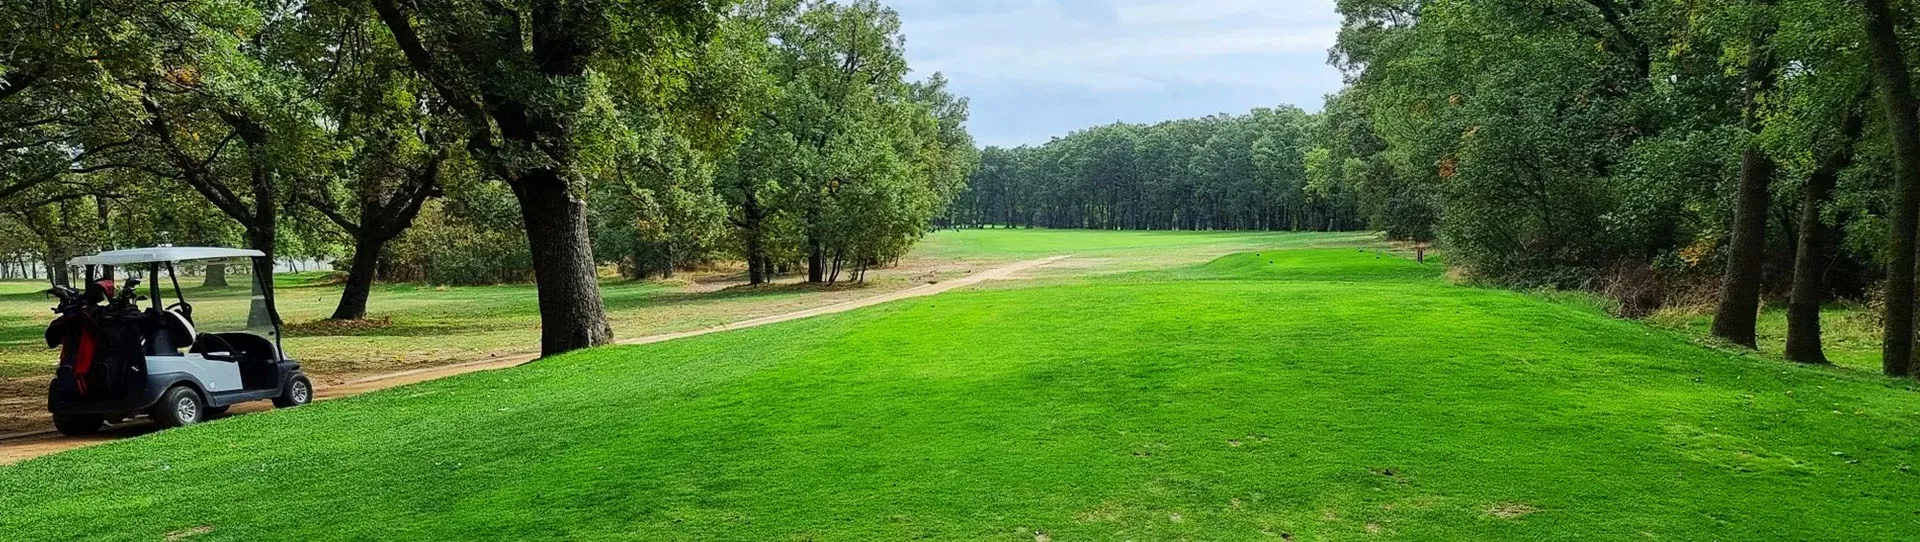 Spain golf courses - La Herreria Golf Course - Photo 1